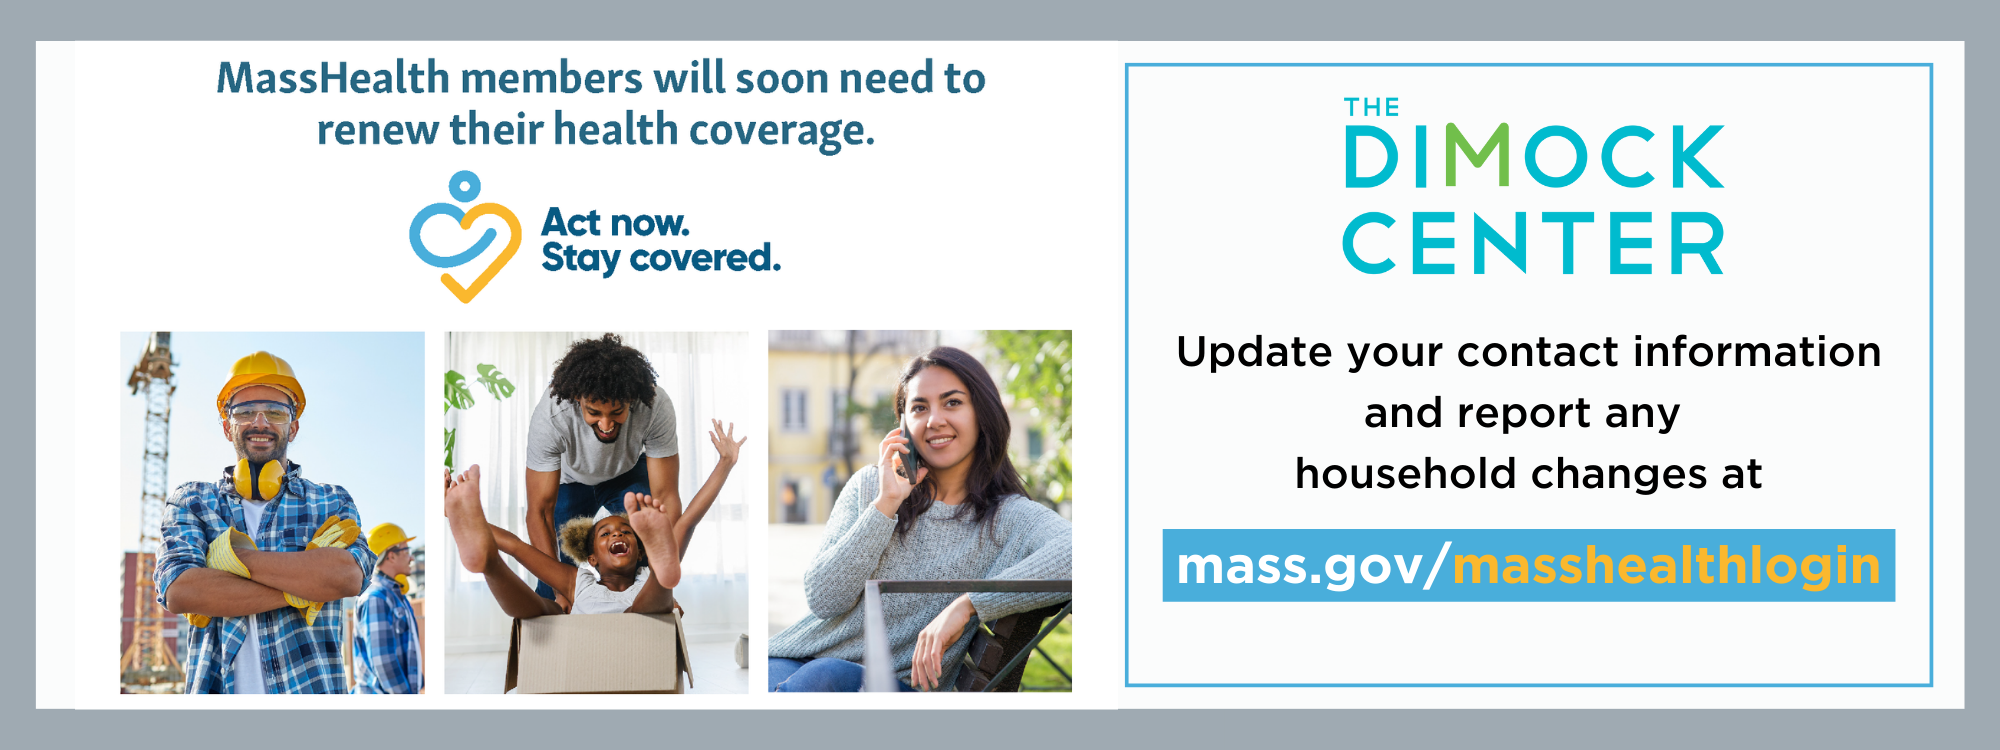 MassHealth members will soon need to renew their health coverage. Visit mass.gov/masshealthlogin